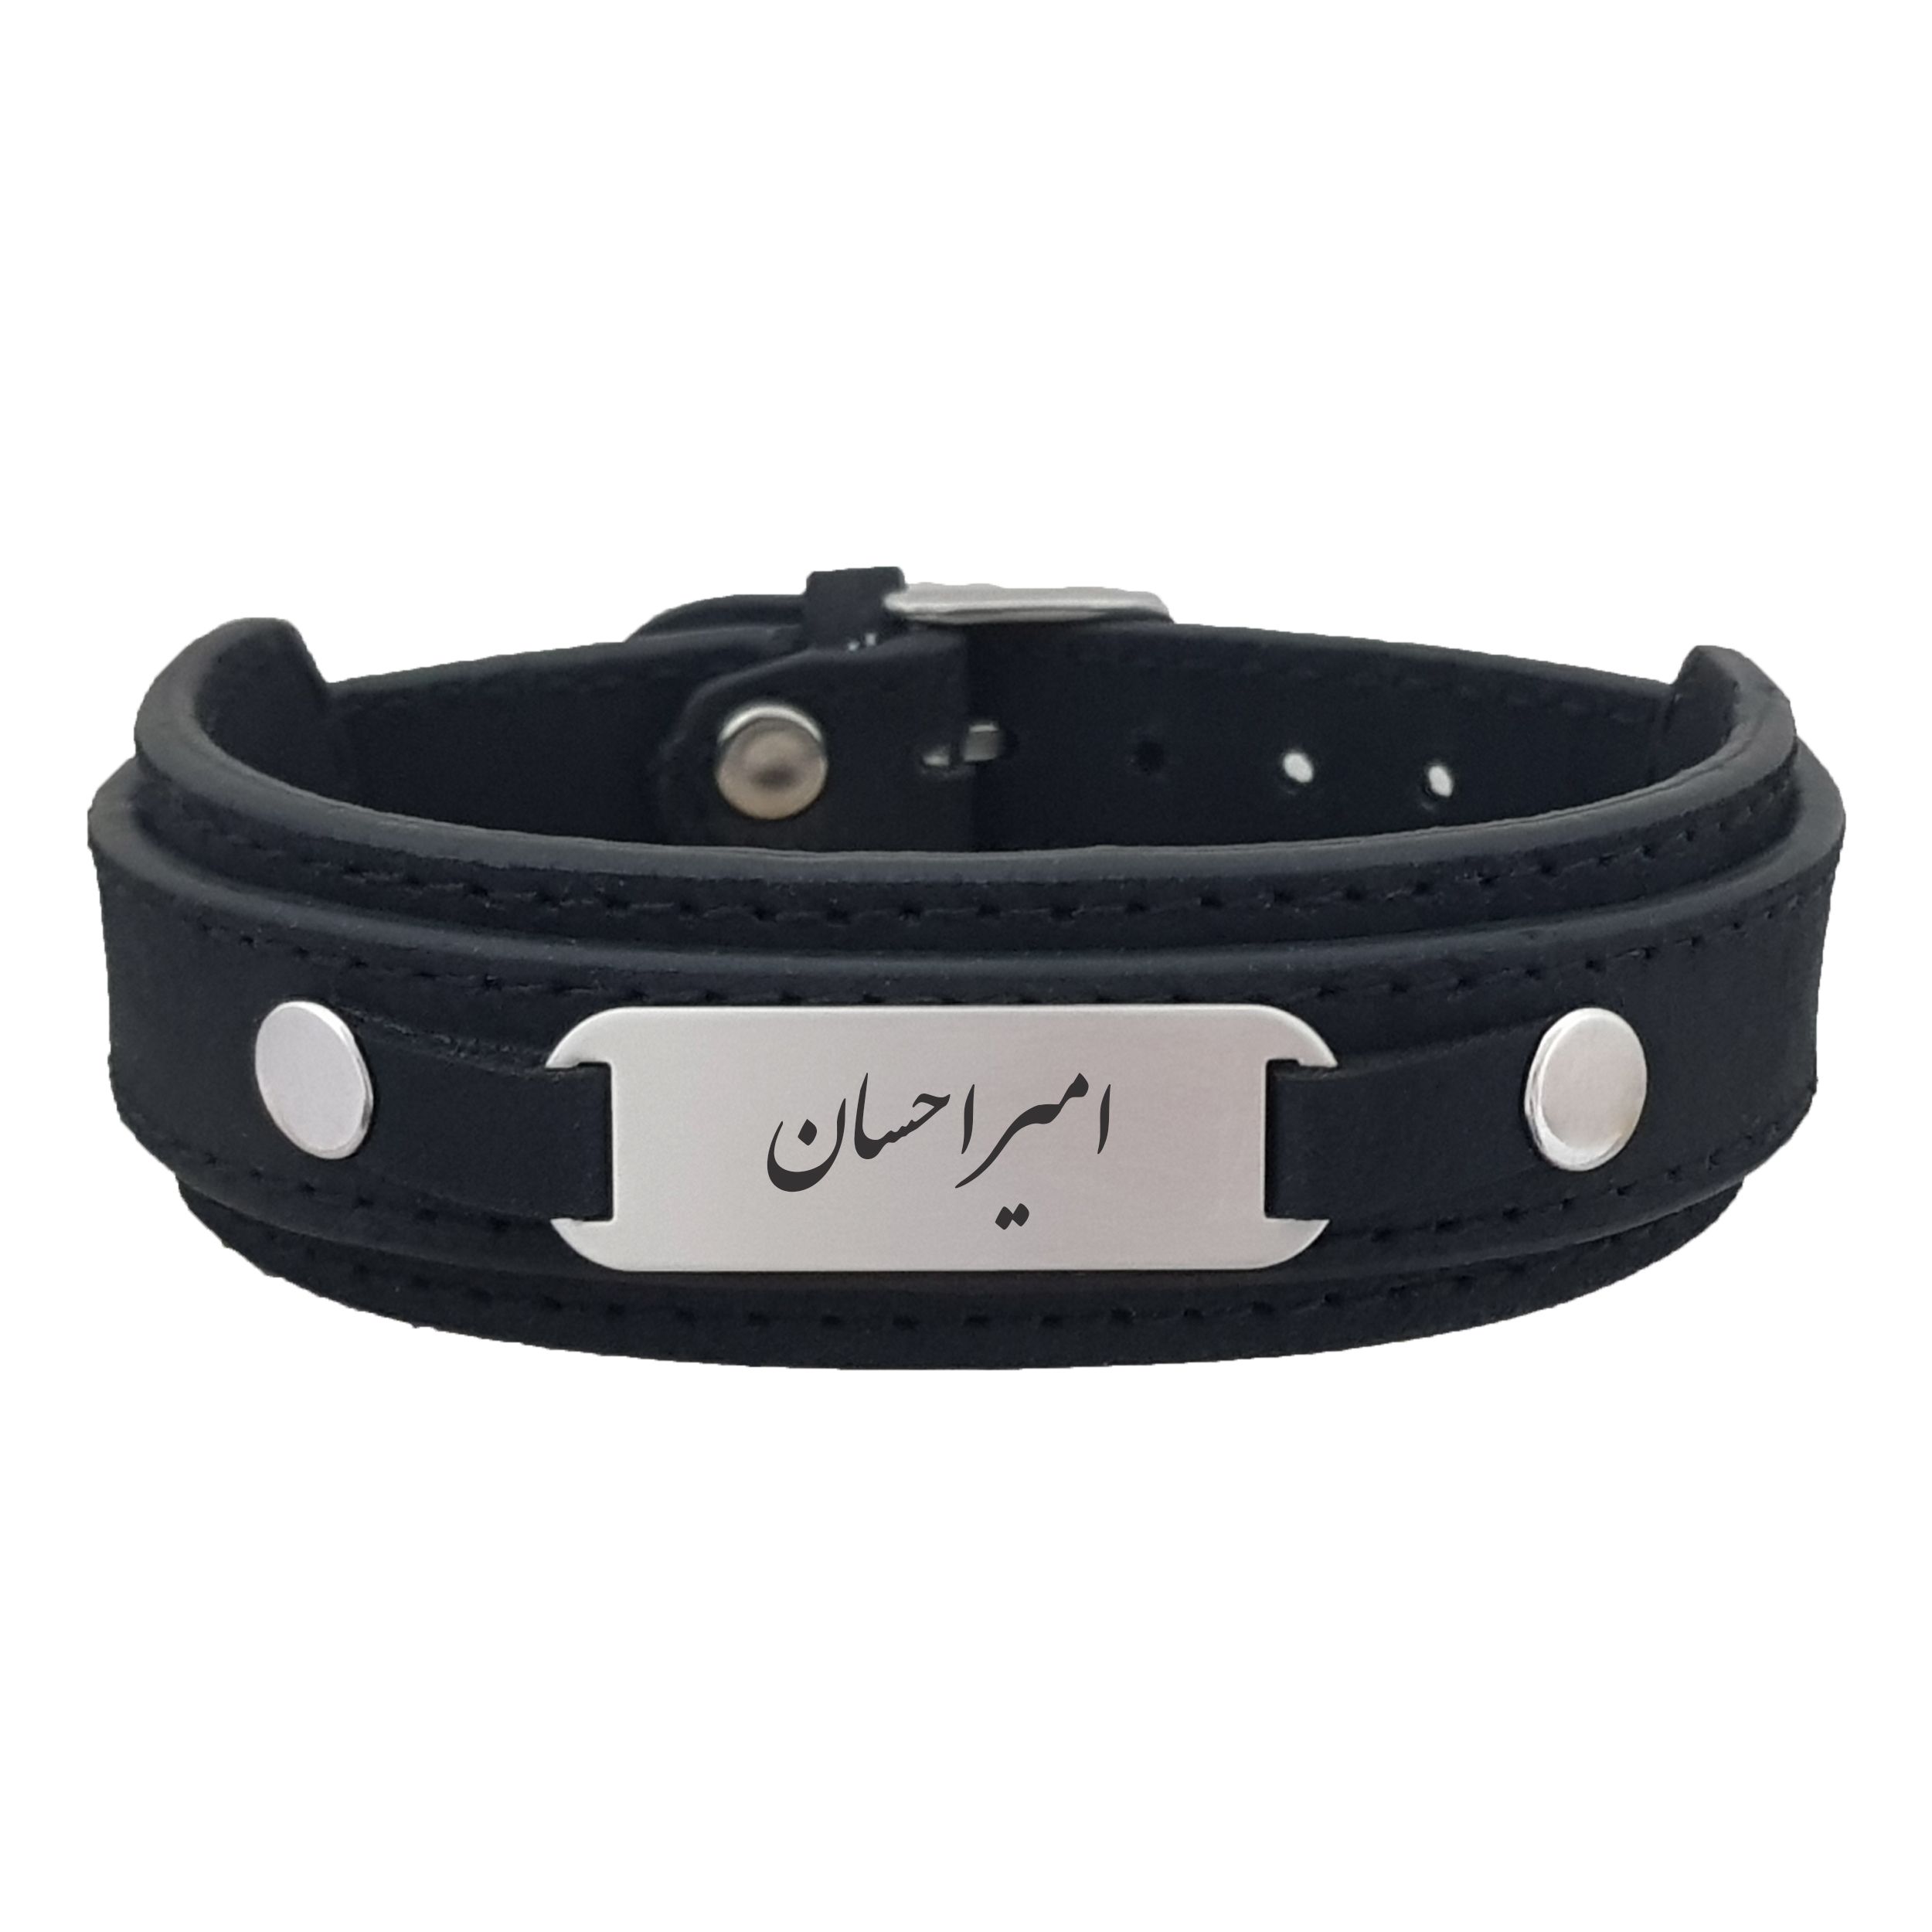 دستبند نقره مردانه ترمه ۱ مدل امیر احسان کد Dcsf0245 -  - 1